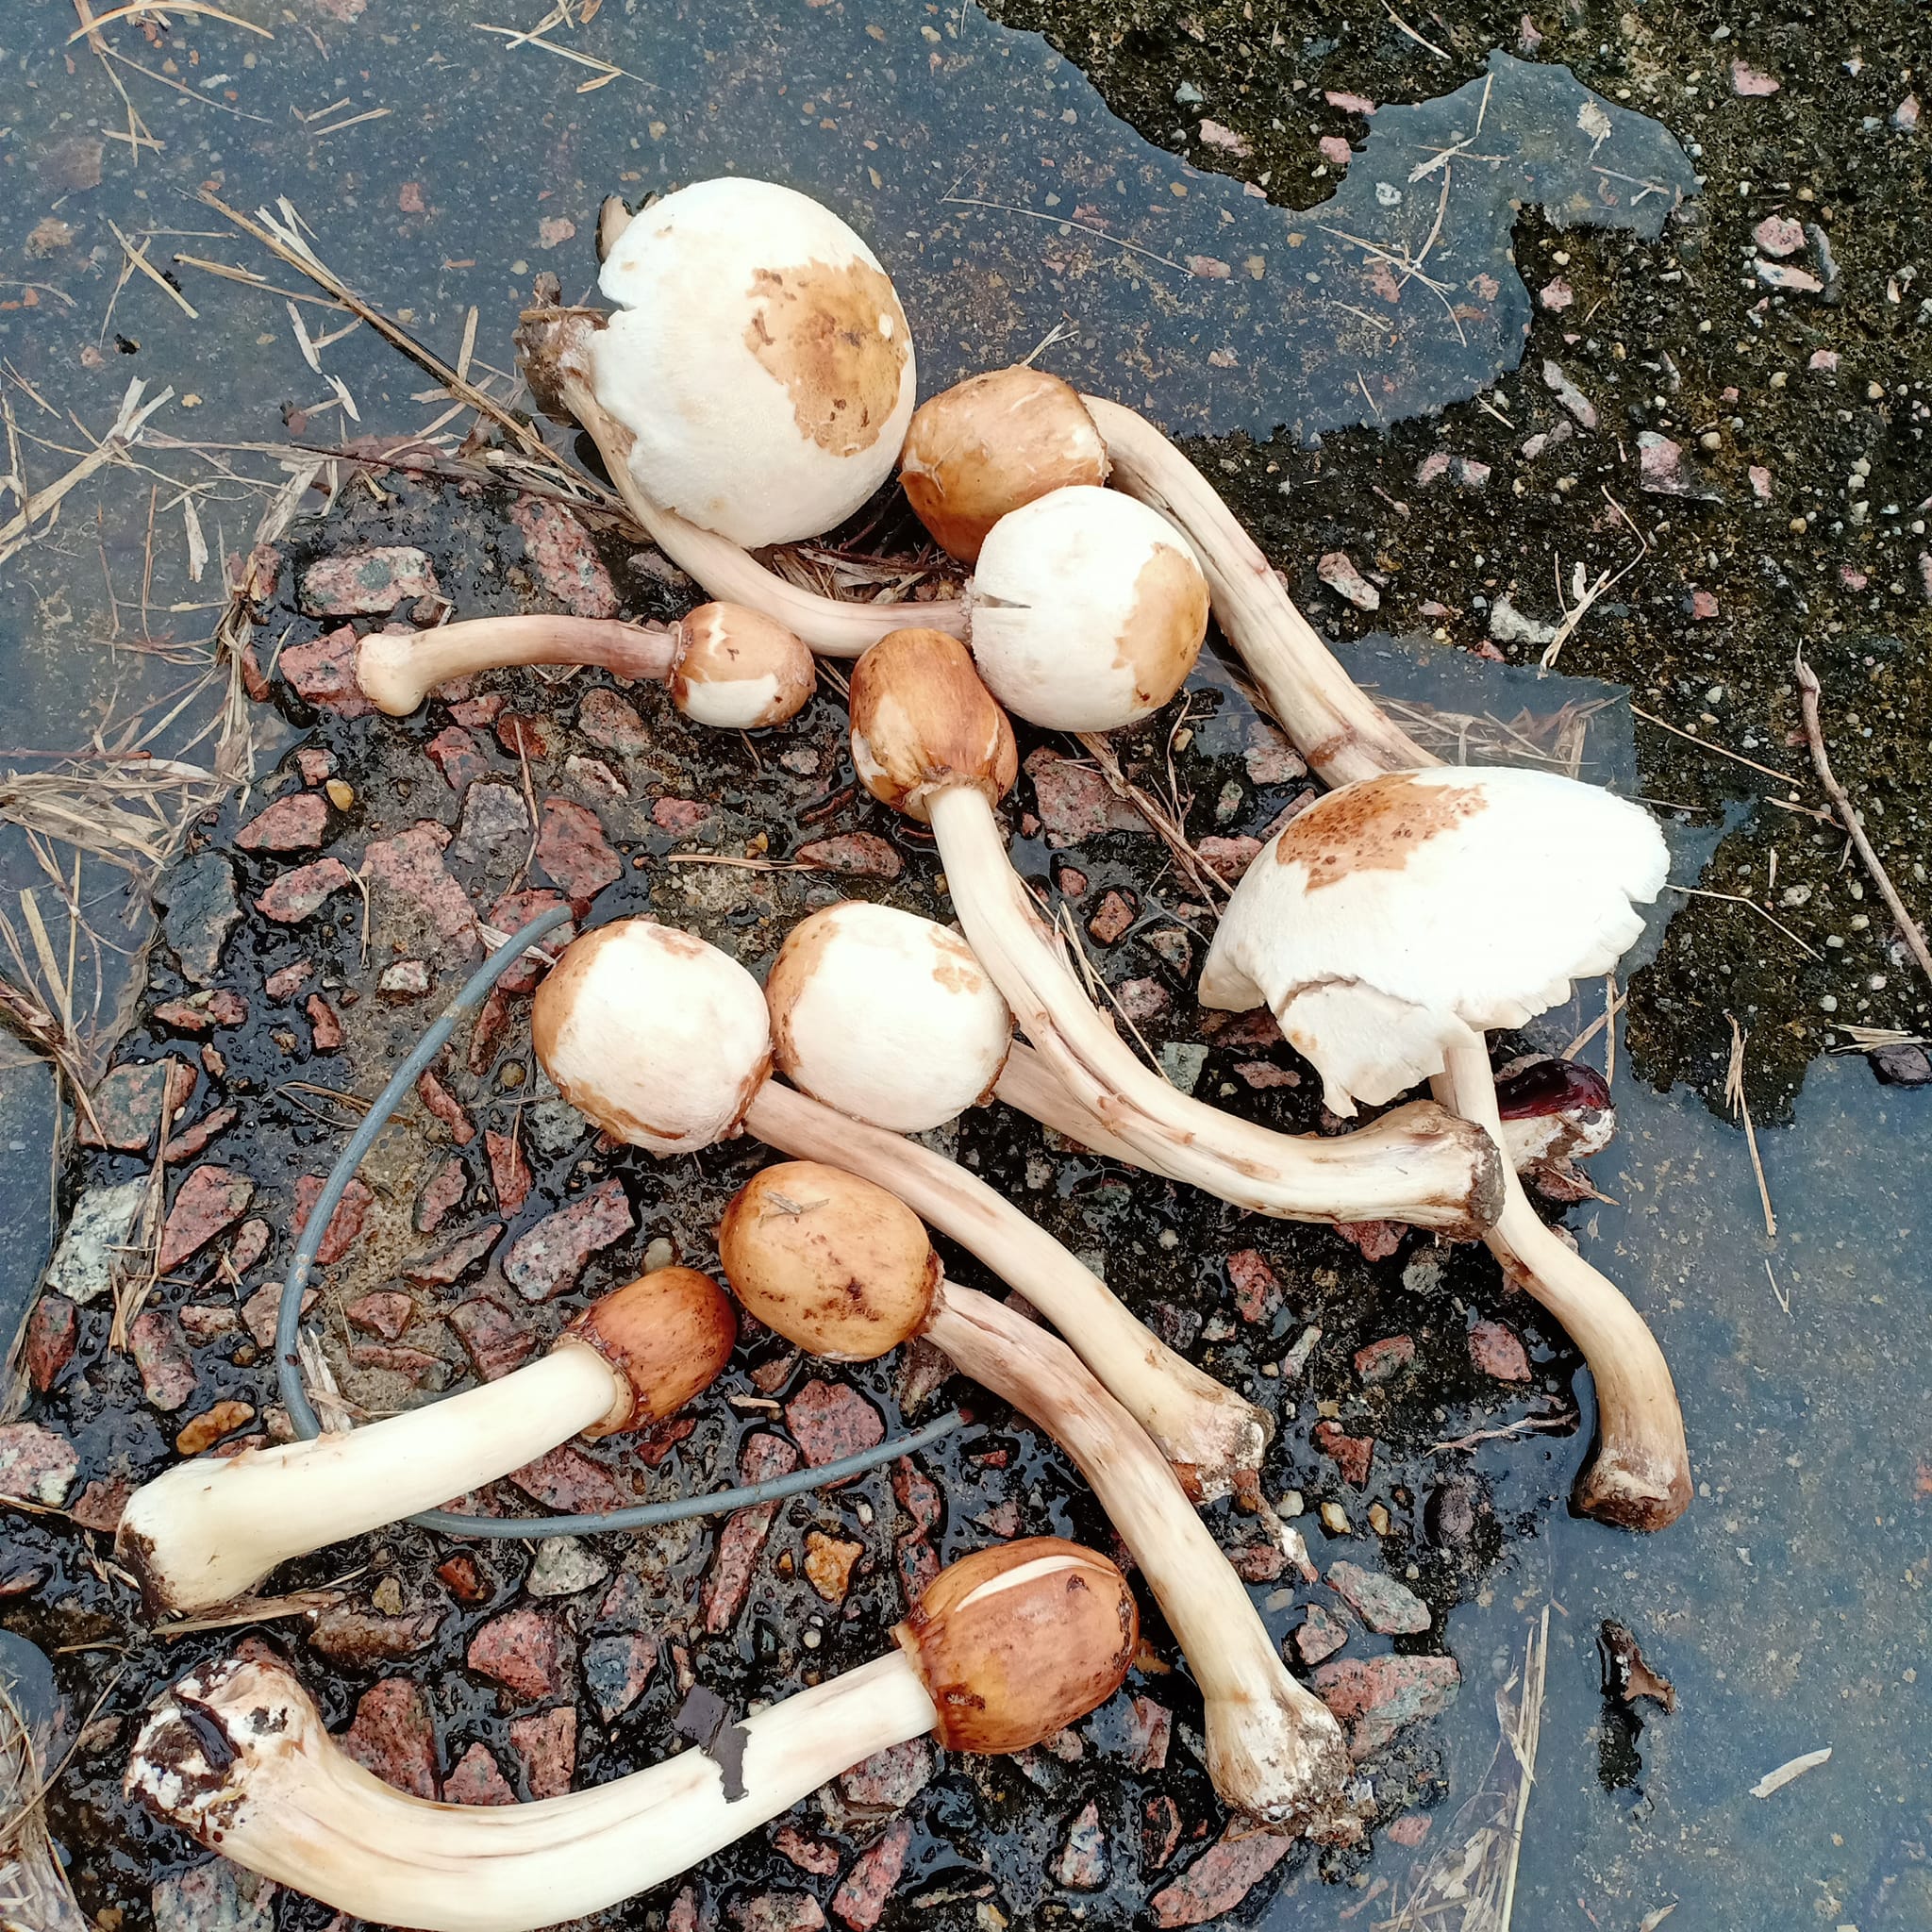 The poisonous mushrooms that Nurul had found.